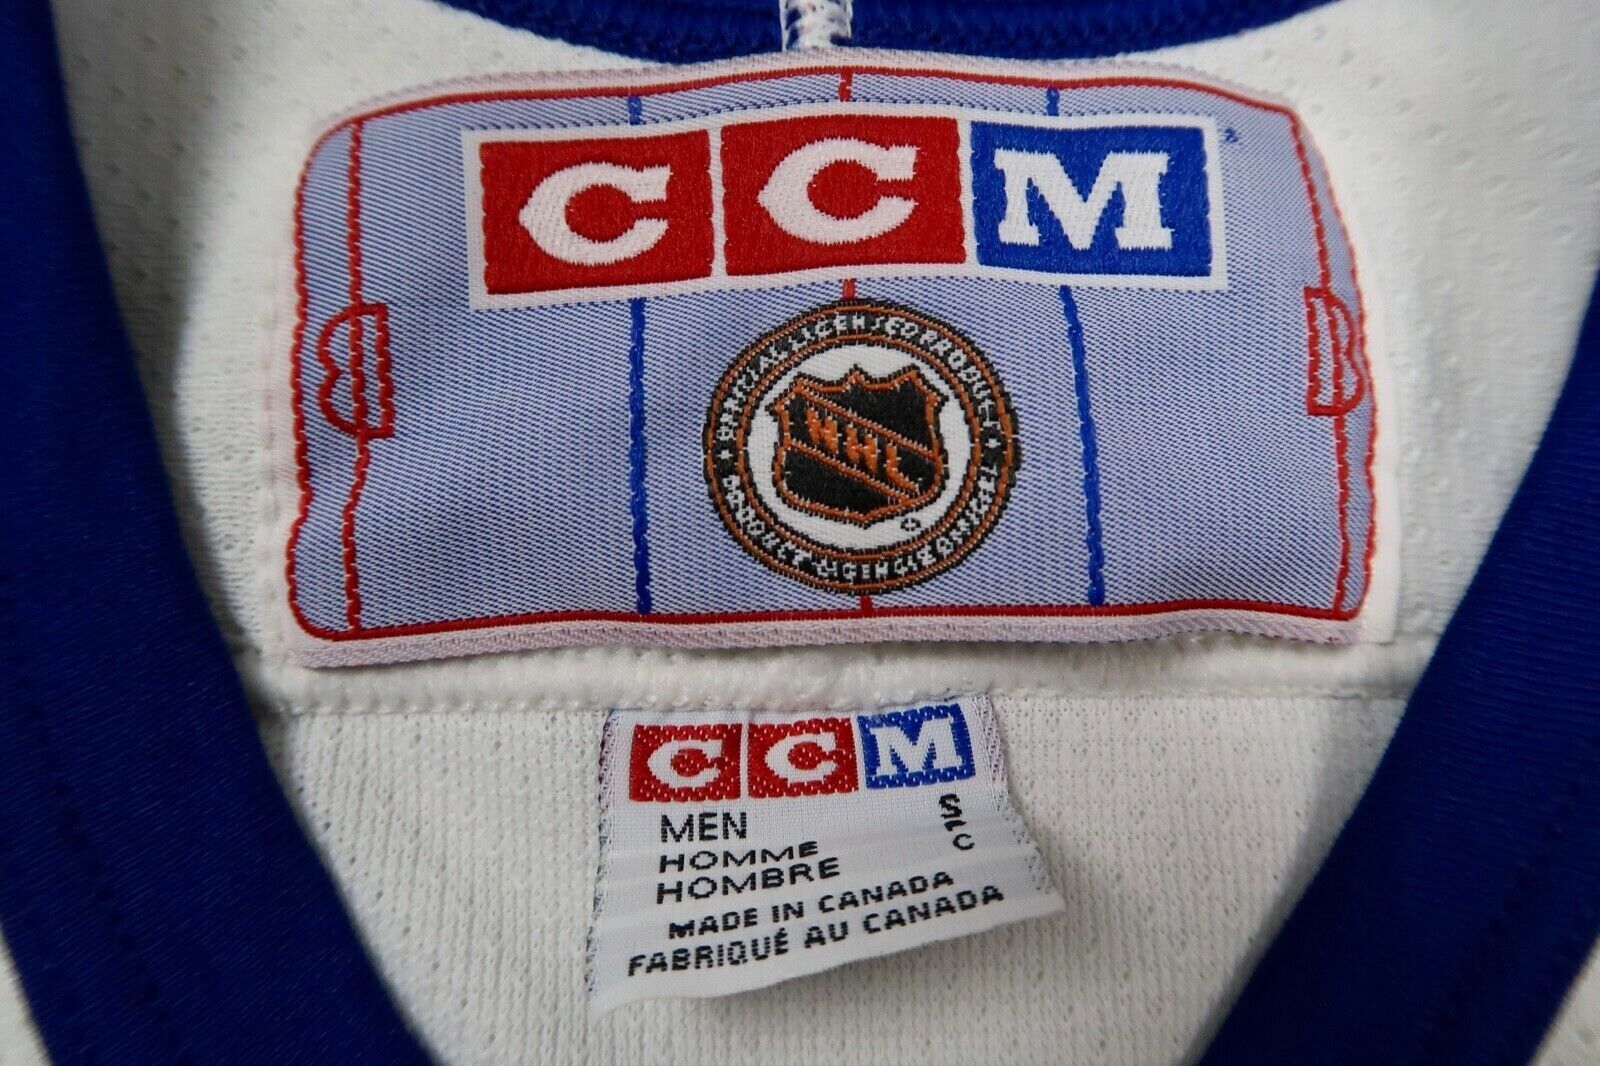 Ccm VTG 1998 NHL All Star Game CCM Hockey Jersey Authentic Rare 90s Size US S / EU 44-46 / 1 - 3 Thumbnail